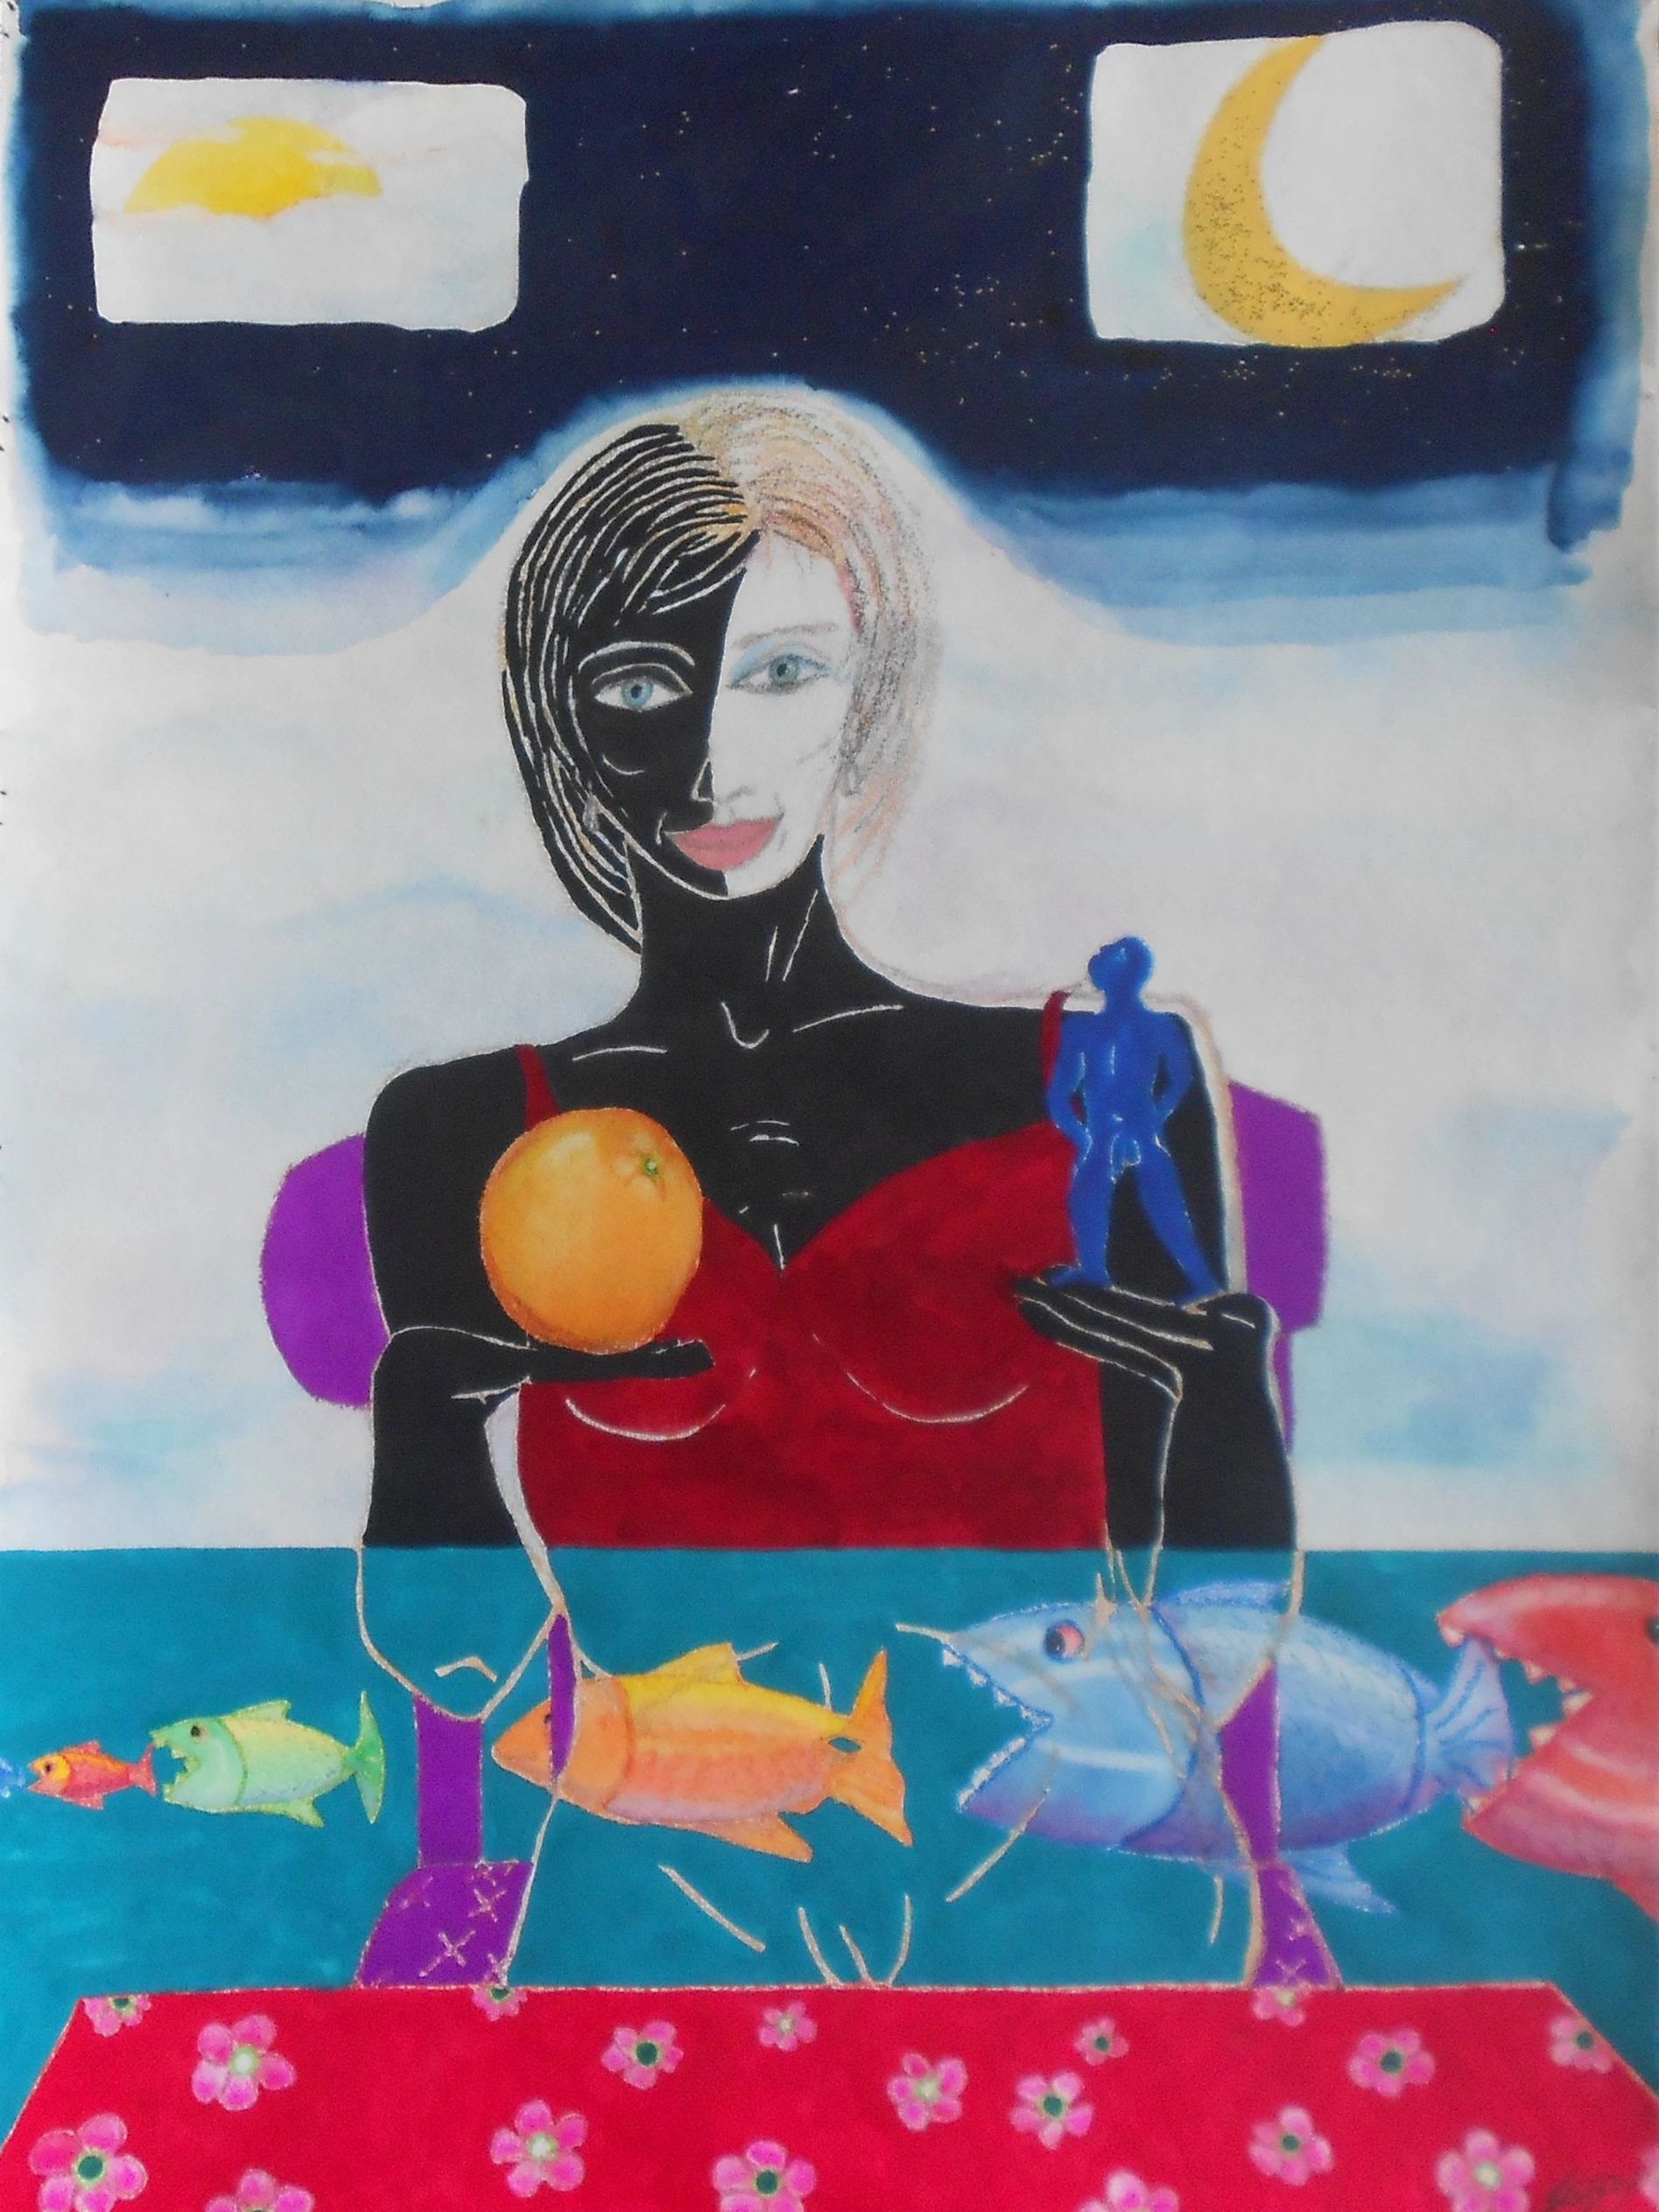 Woman balancing an orange and a man. Red dress. Moon and fish. Face half black, half white.